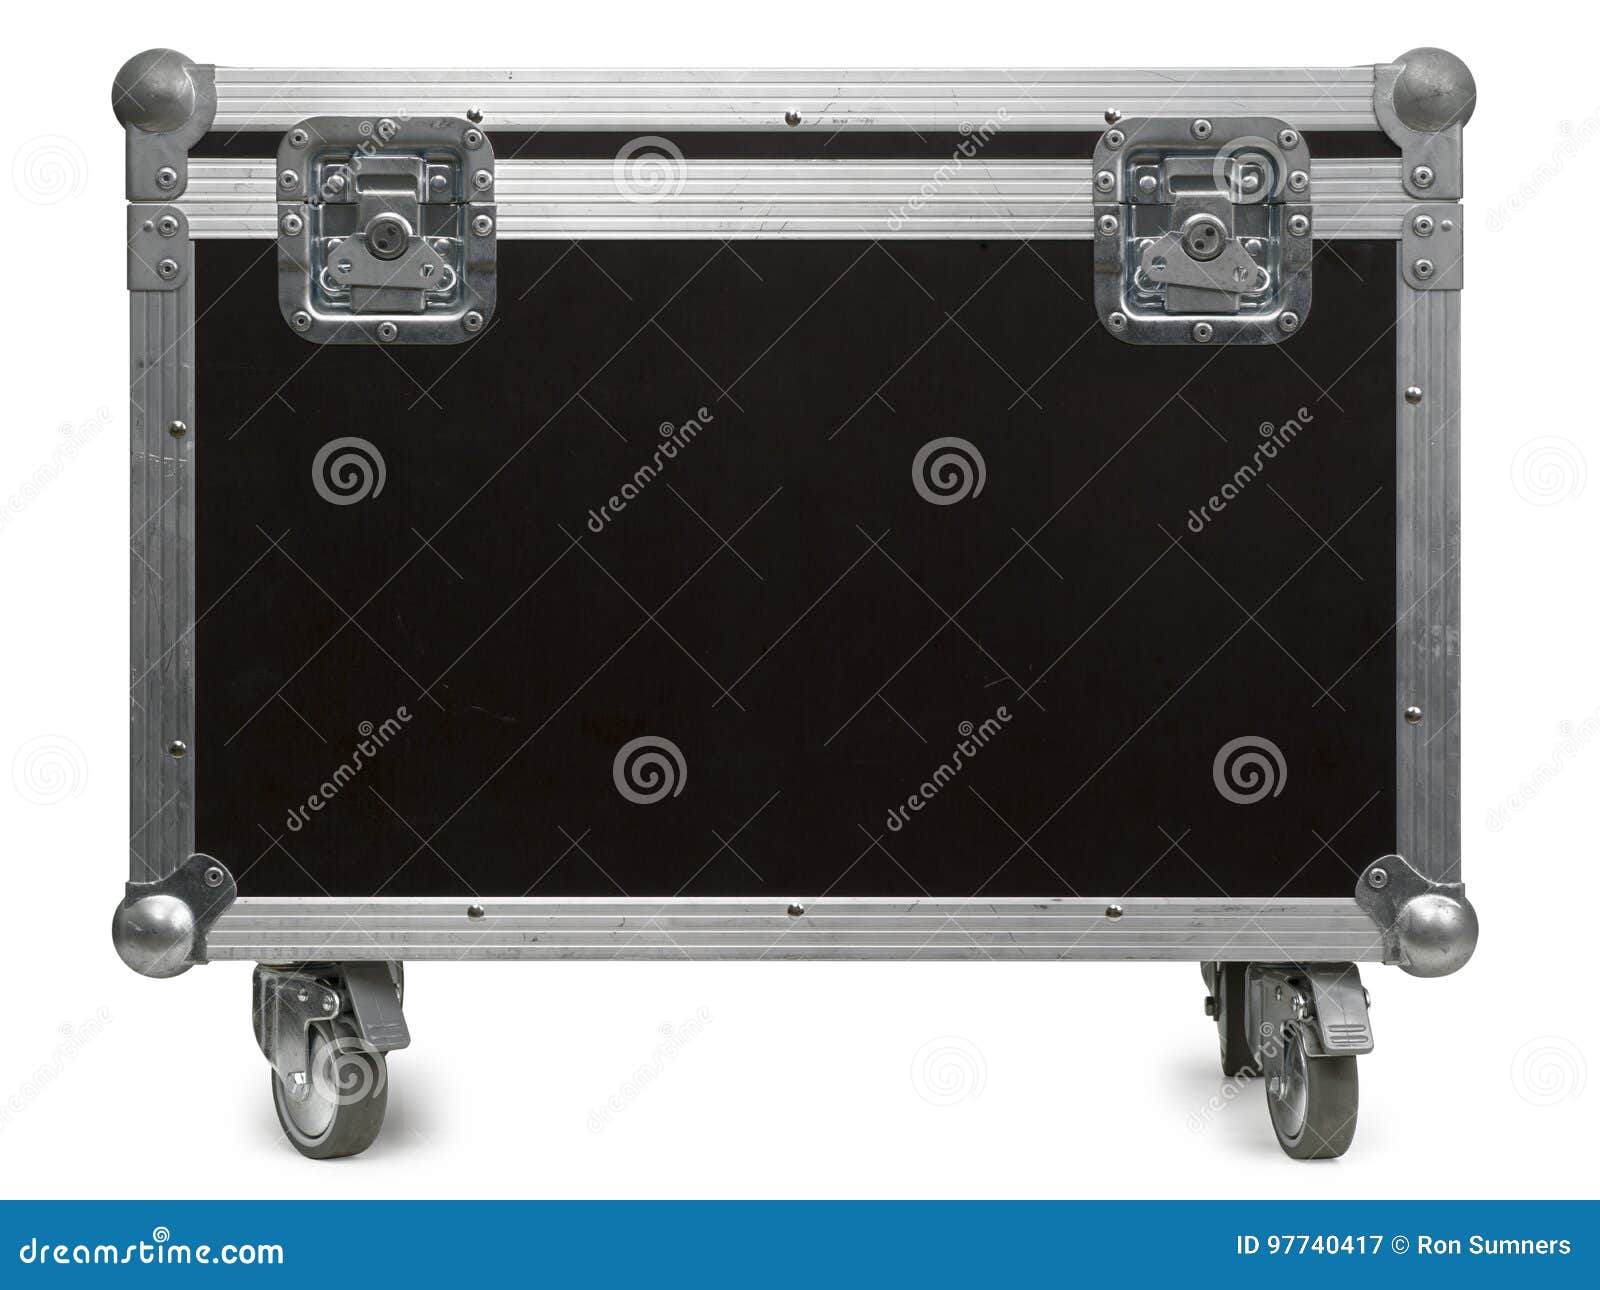 equipment flight case with wheels